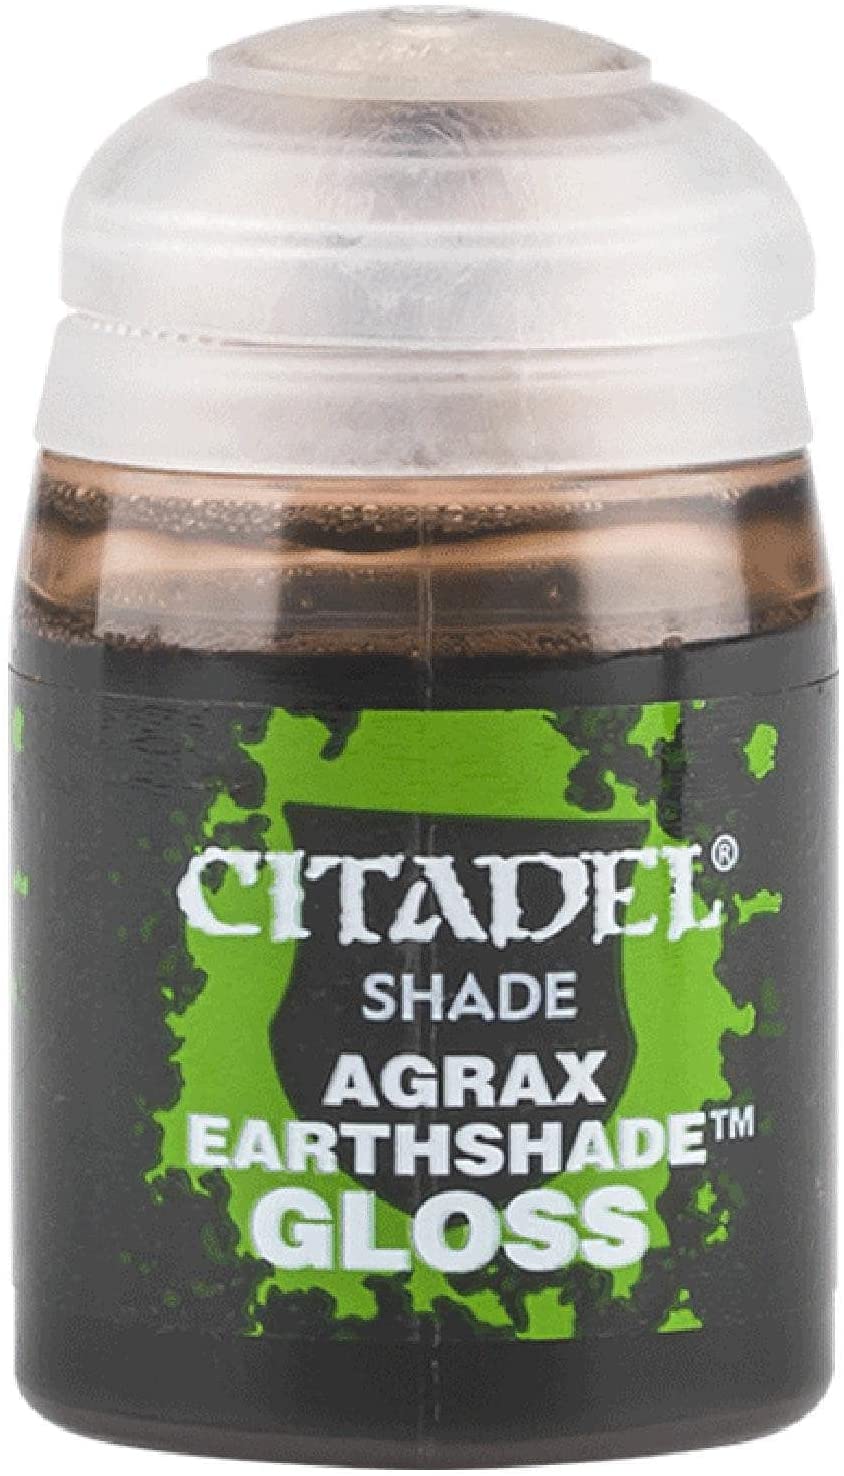 Citadel Paint: Shade - Agrax Earthshade